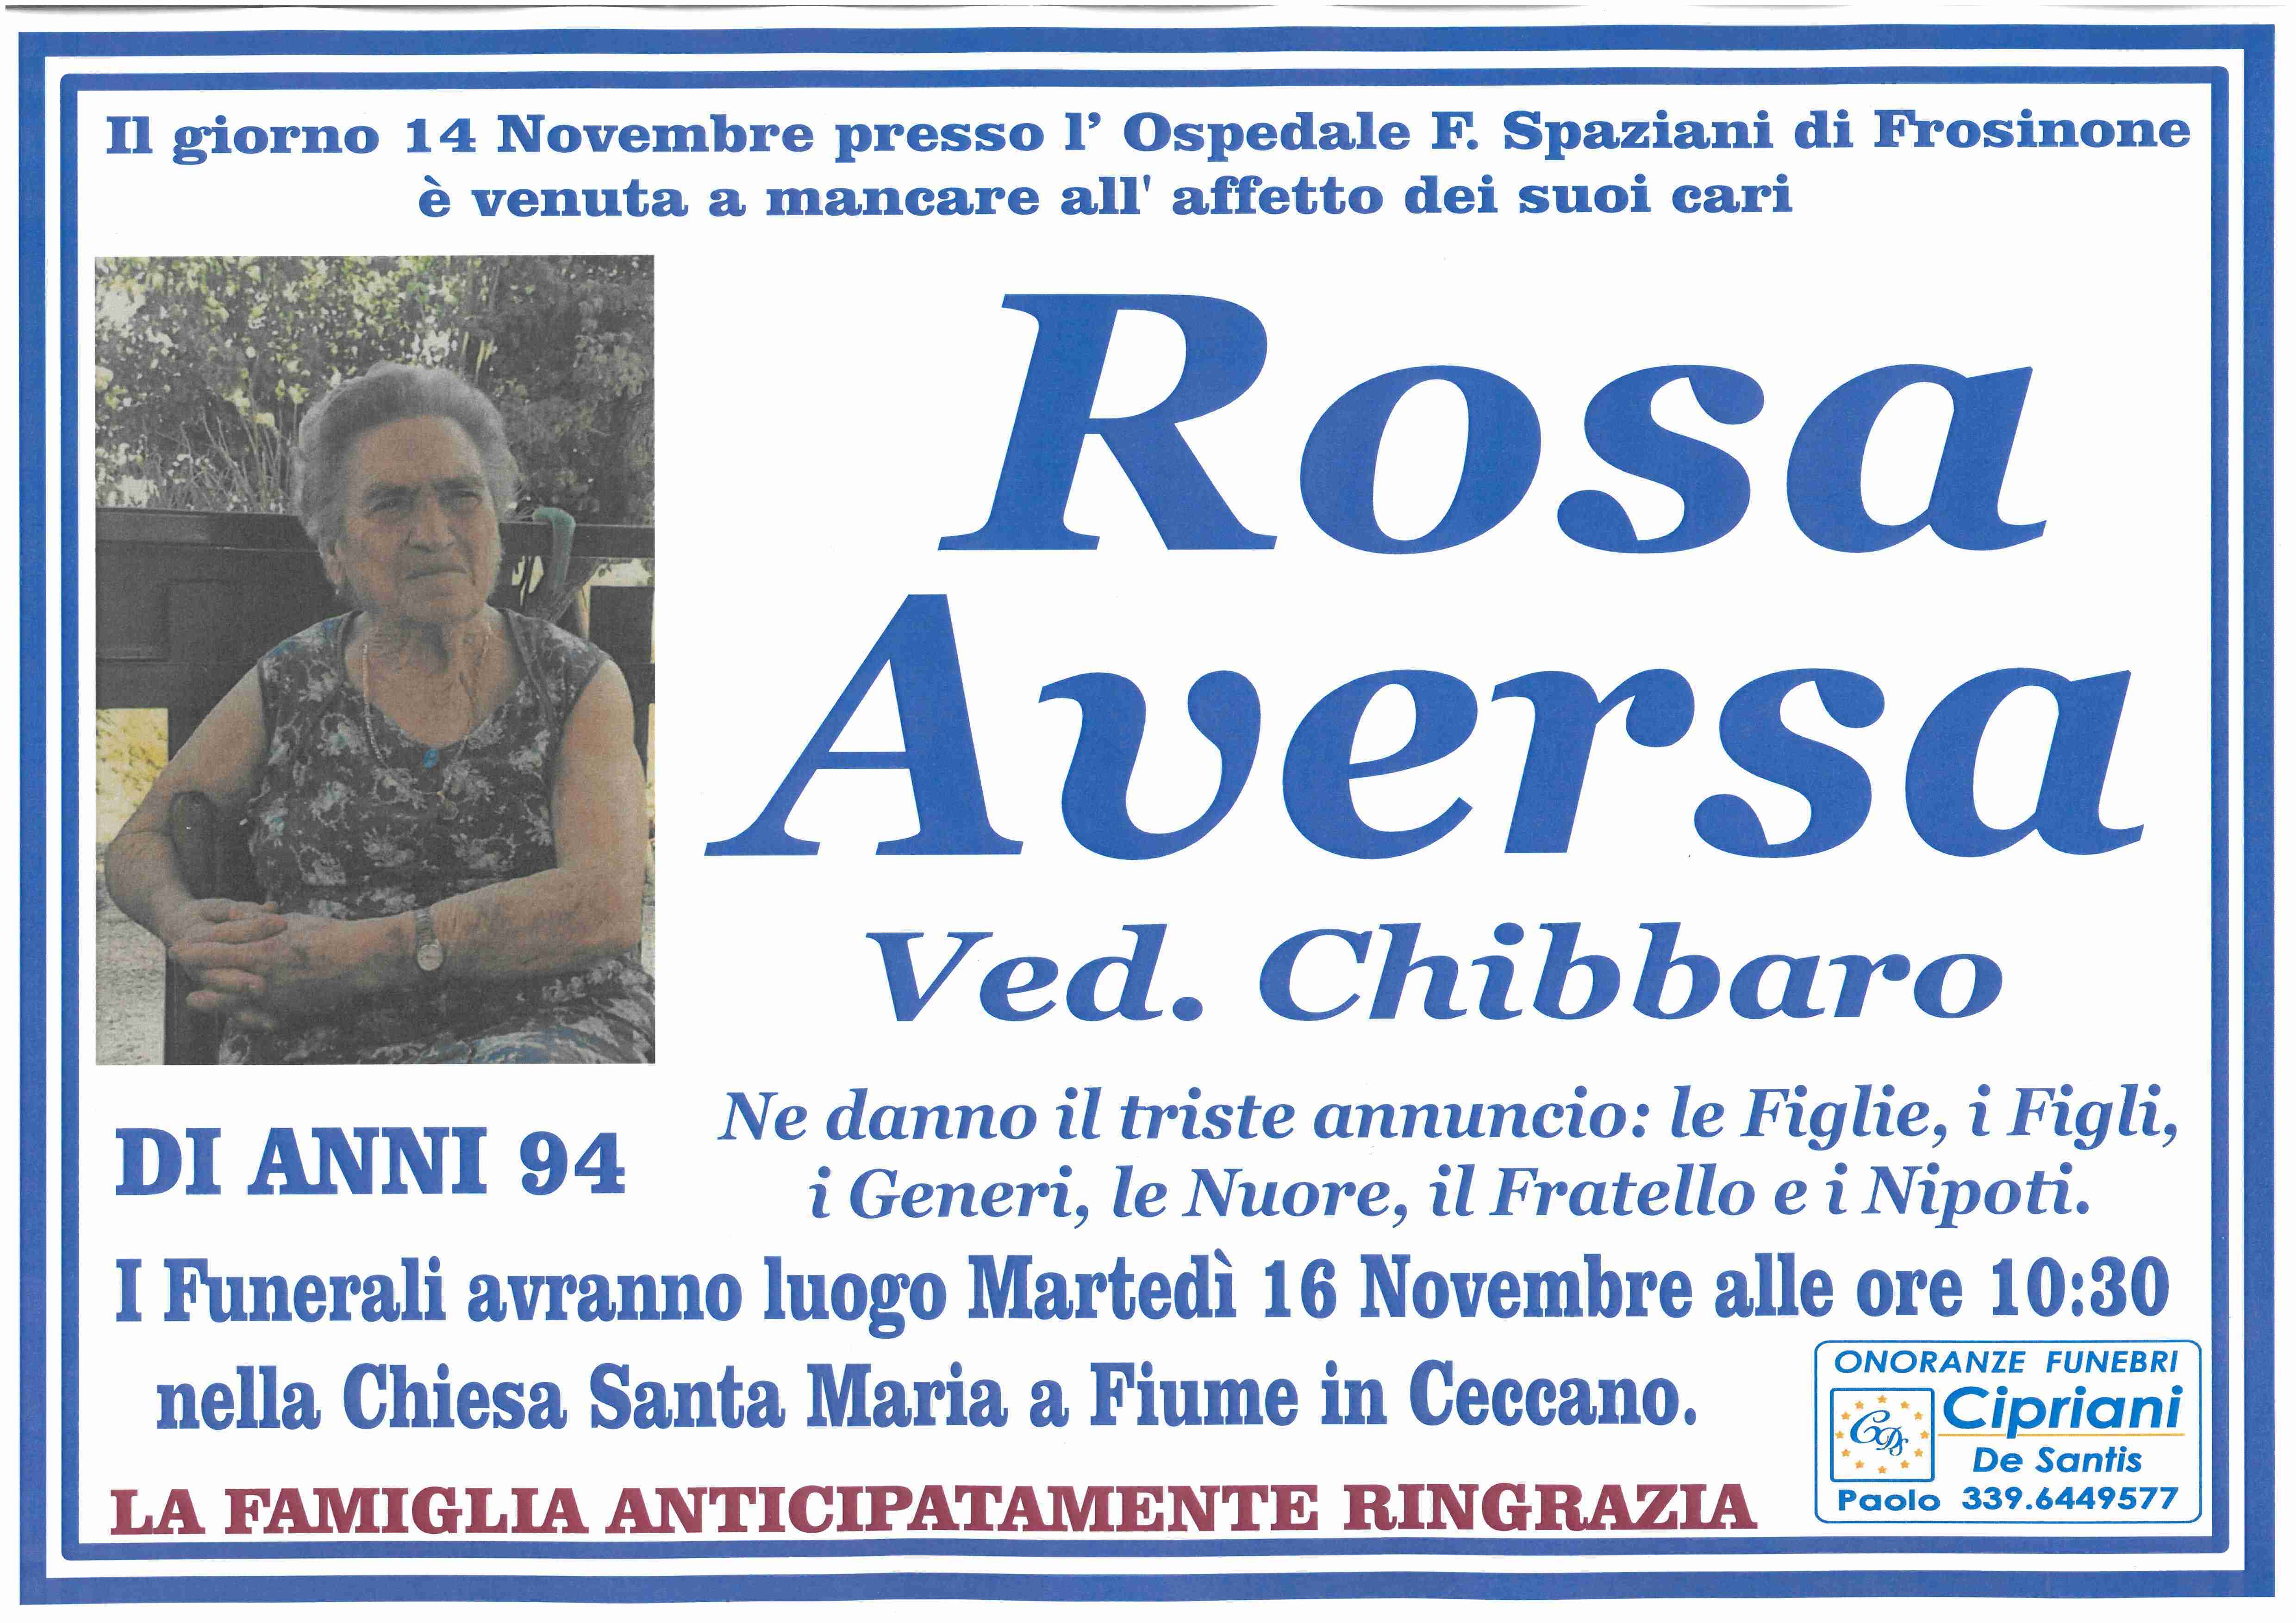 Rosa Aversa